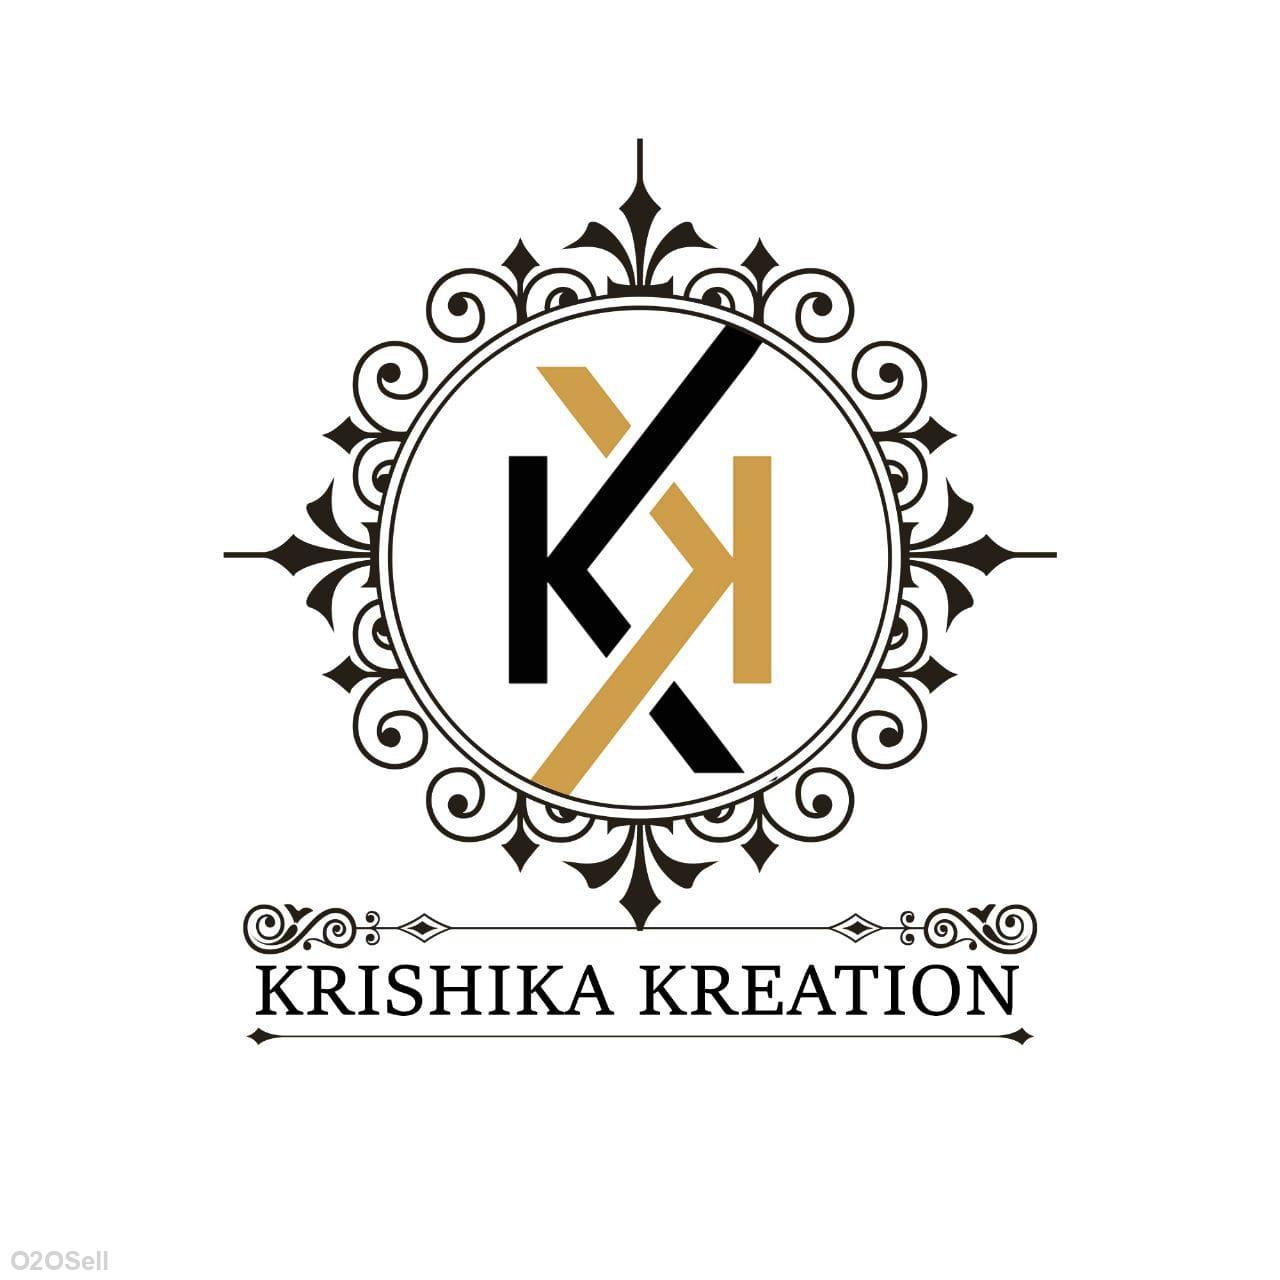 krishika kreation - Profile Image